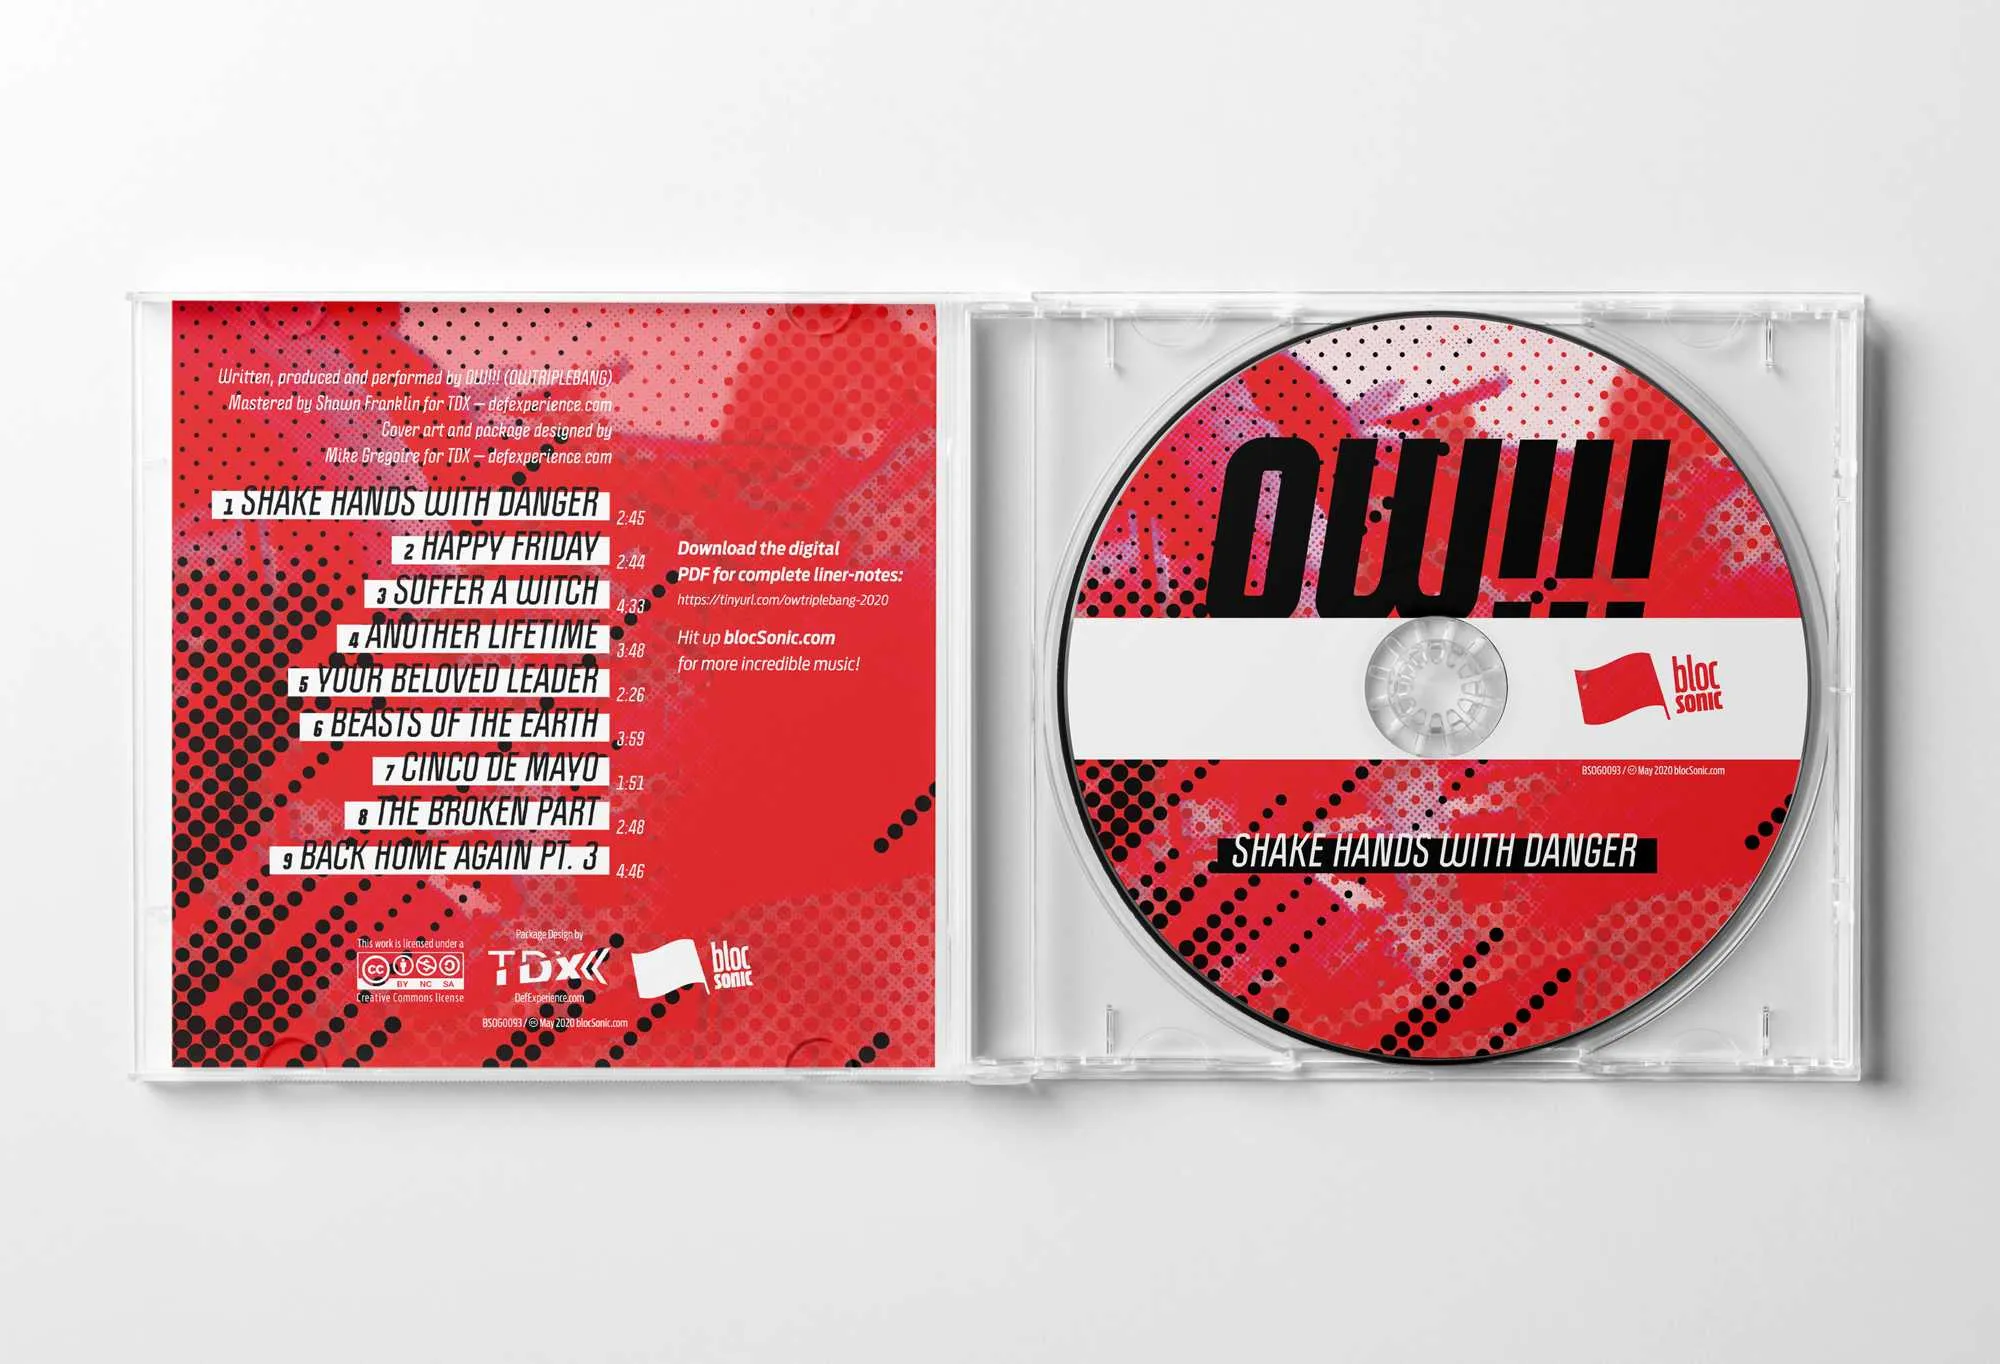 Album promo for “Shake Hands With Danger” by OWTRIPLEBANG